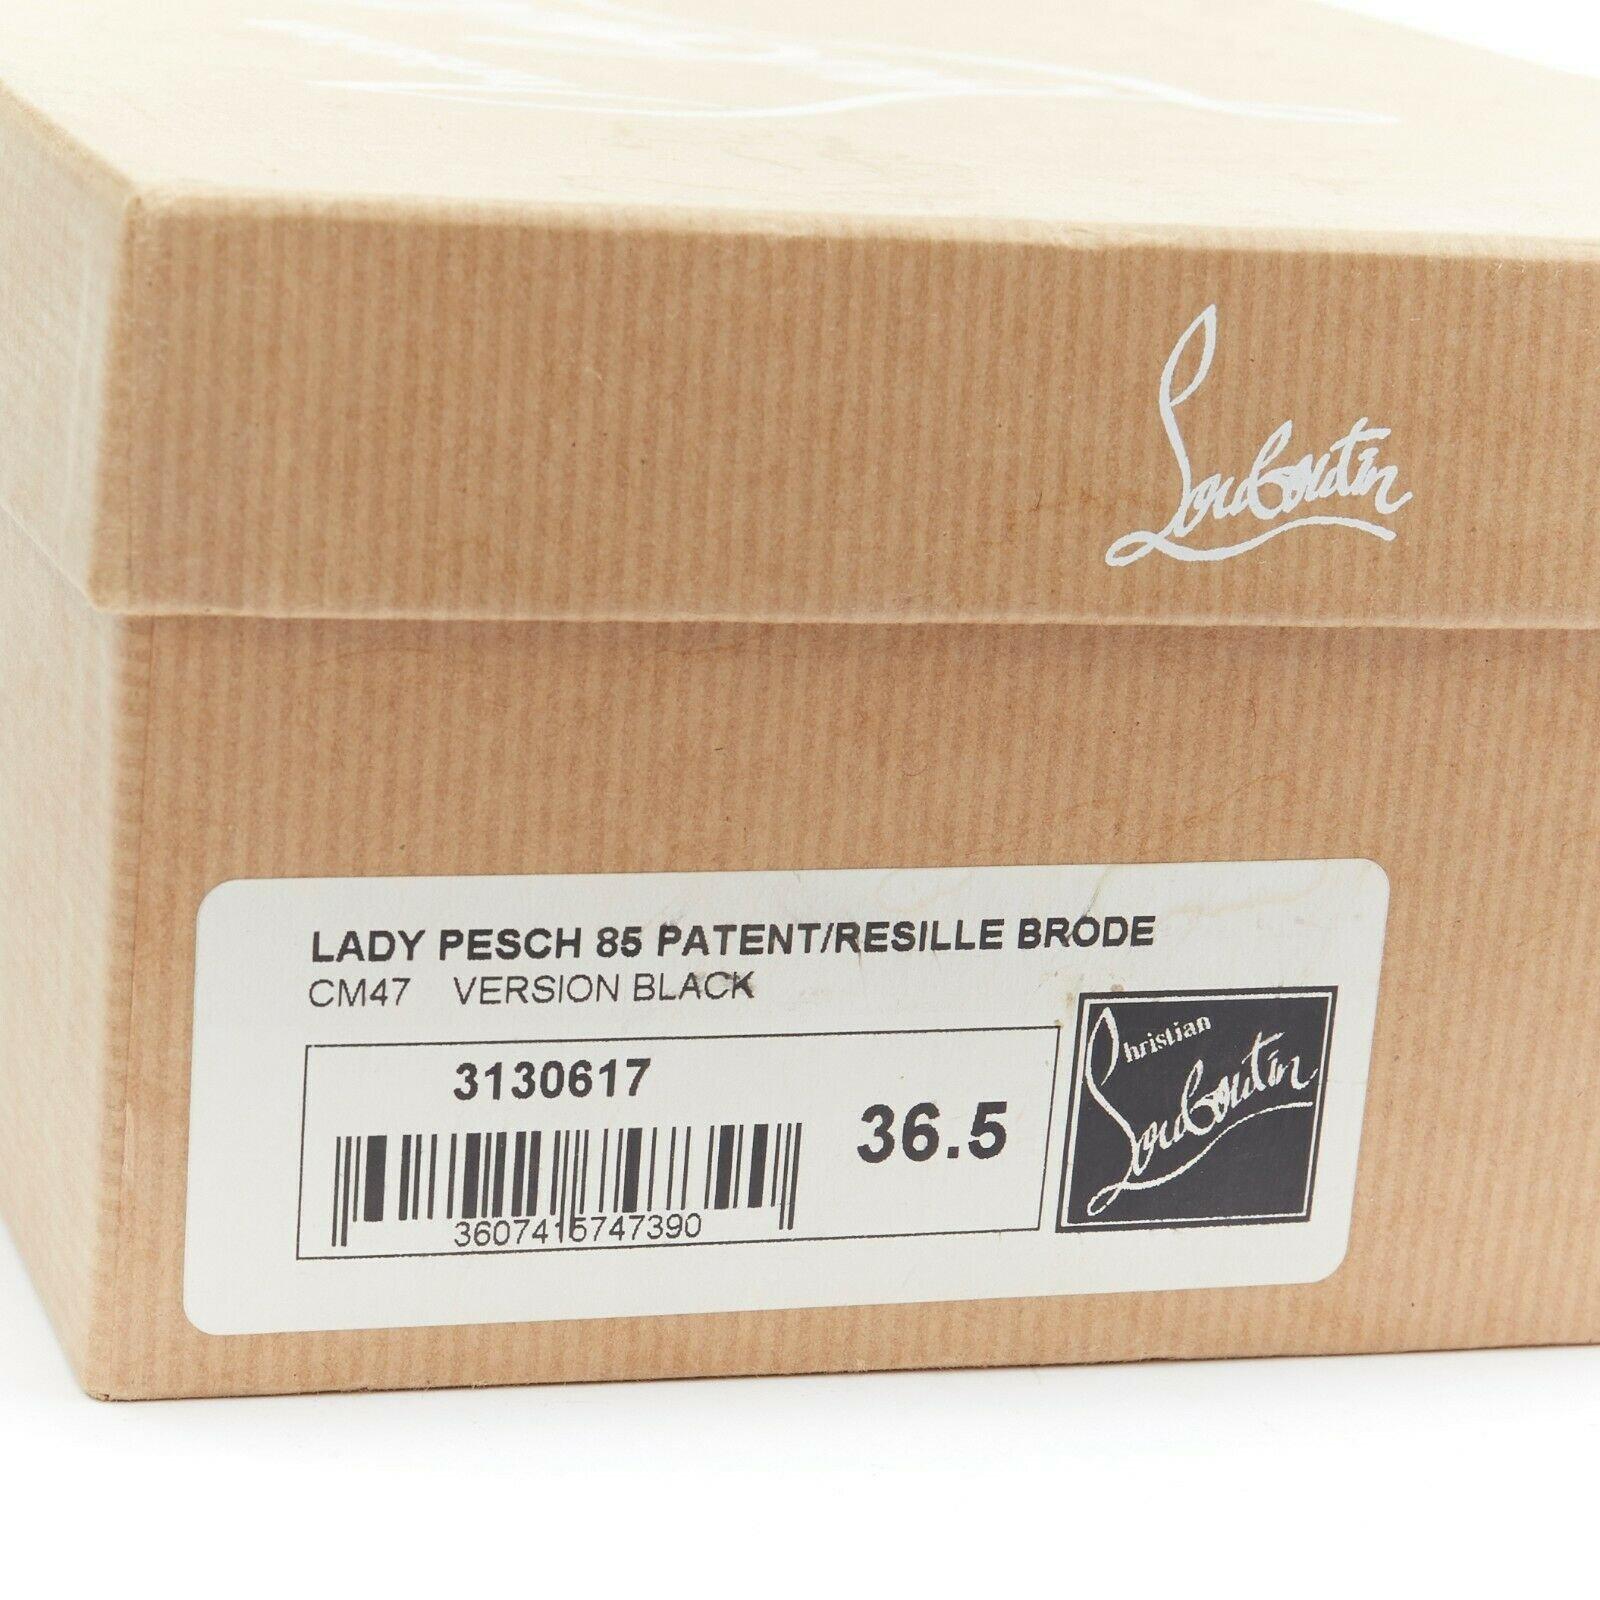 CHRISTIAN LOUBOUTIN Vendome Sling 120 teal patent leather peep toe heels EU36.5 7